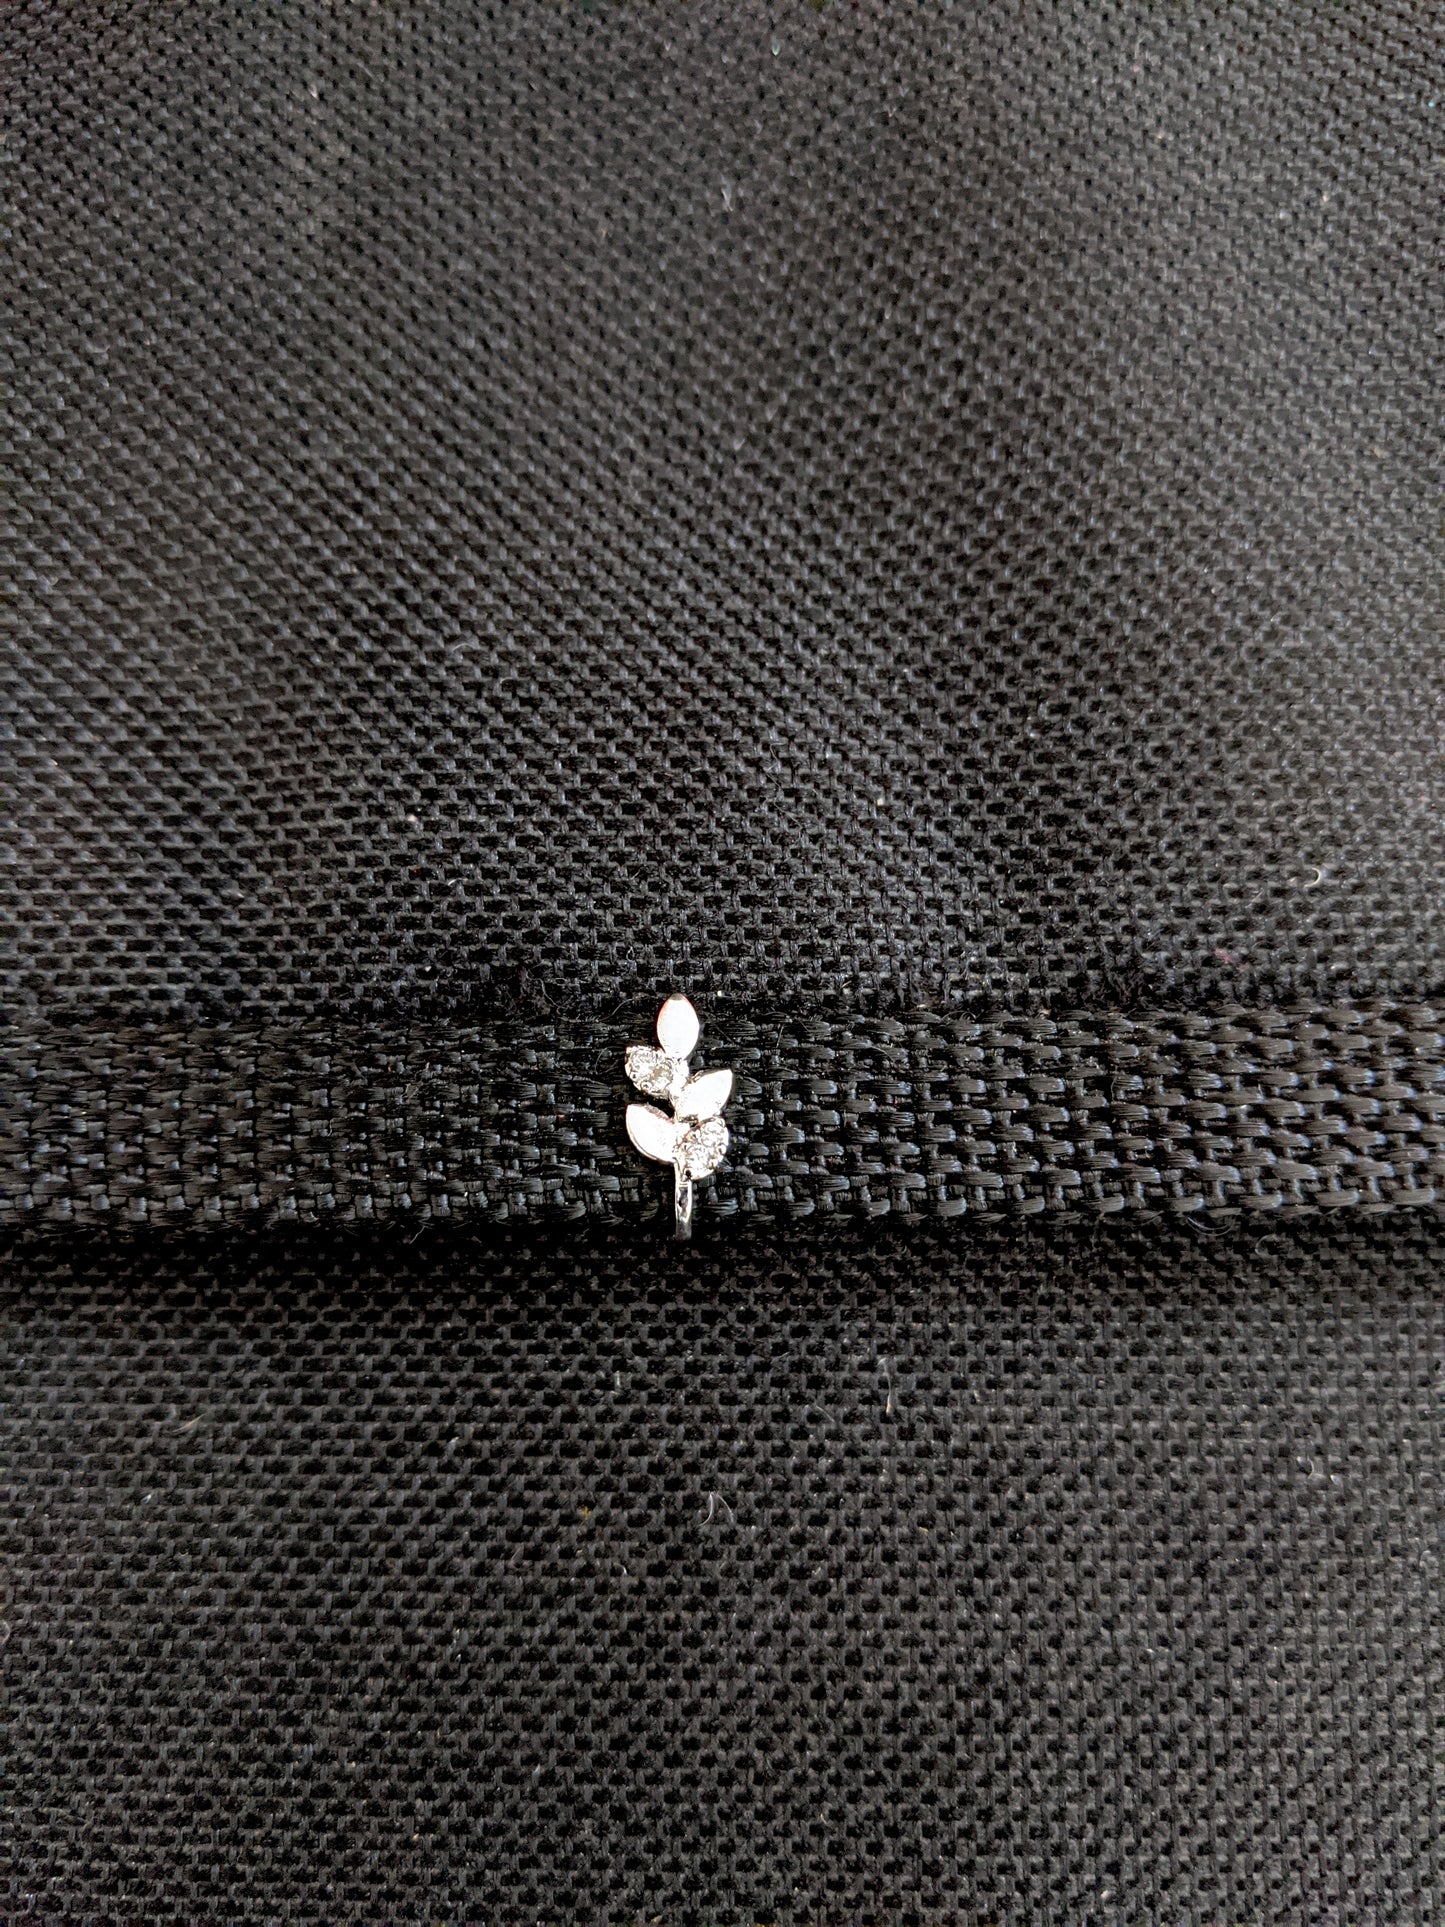 Tiny Leaf design Clip on Nose Pin  - Platinum finish